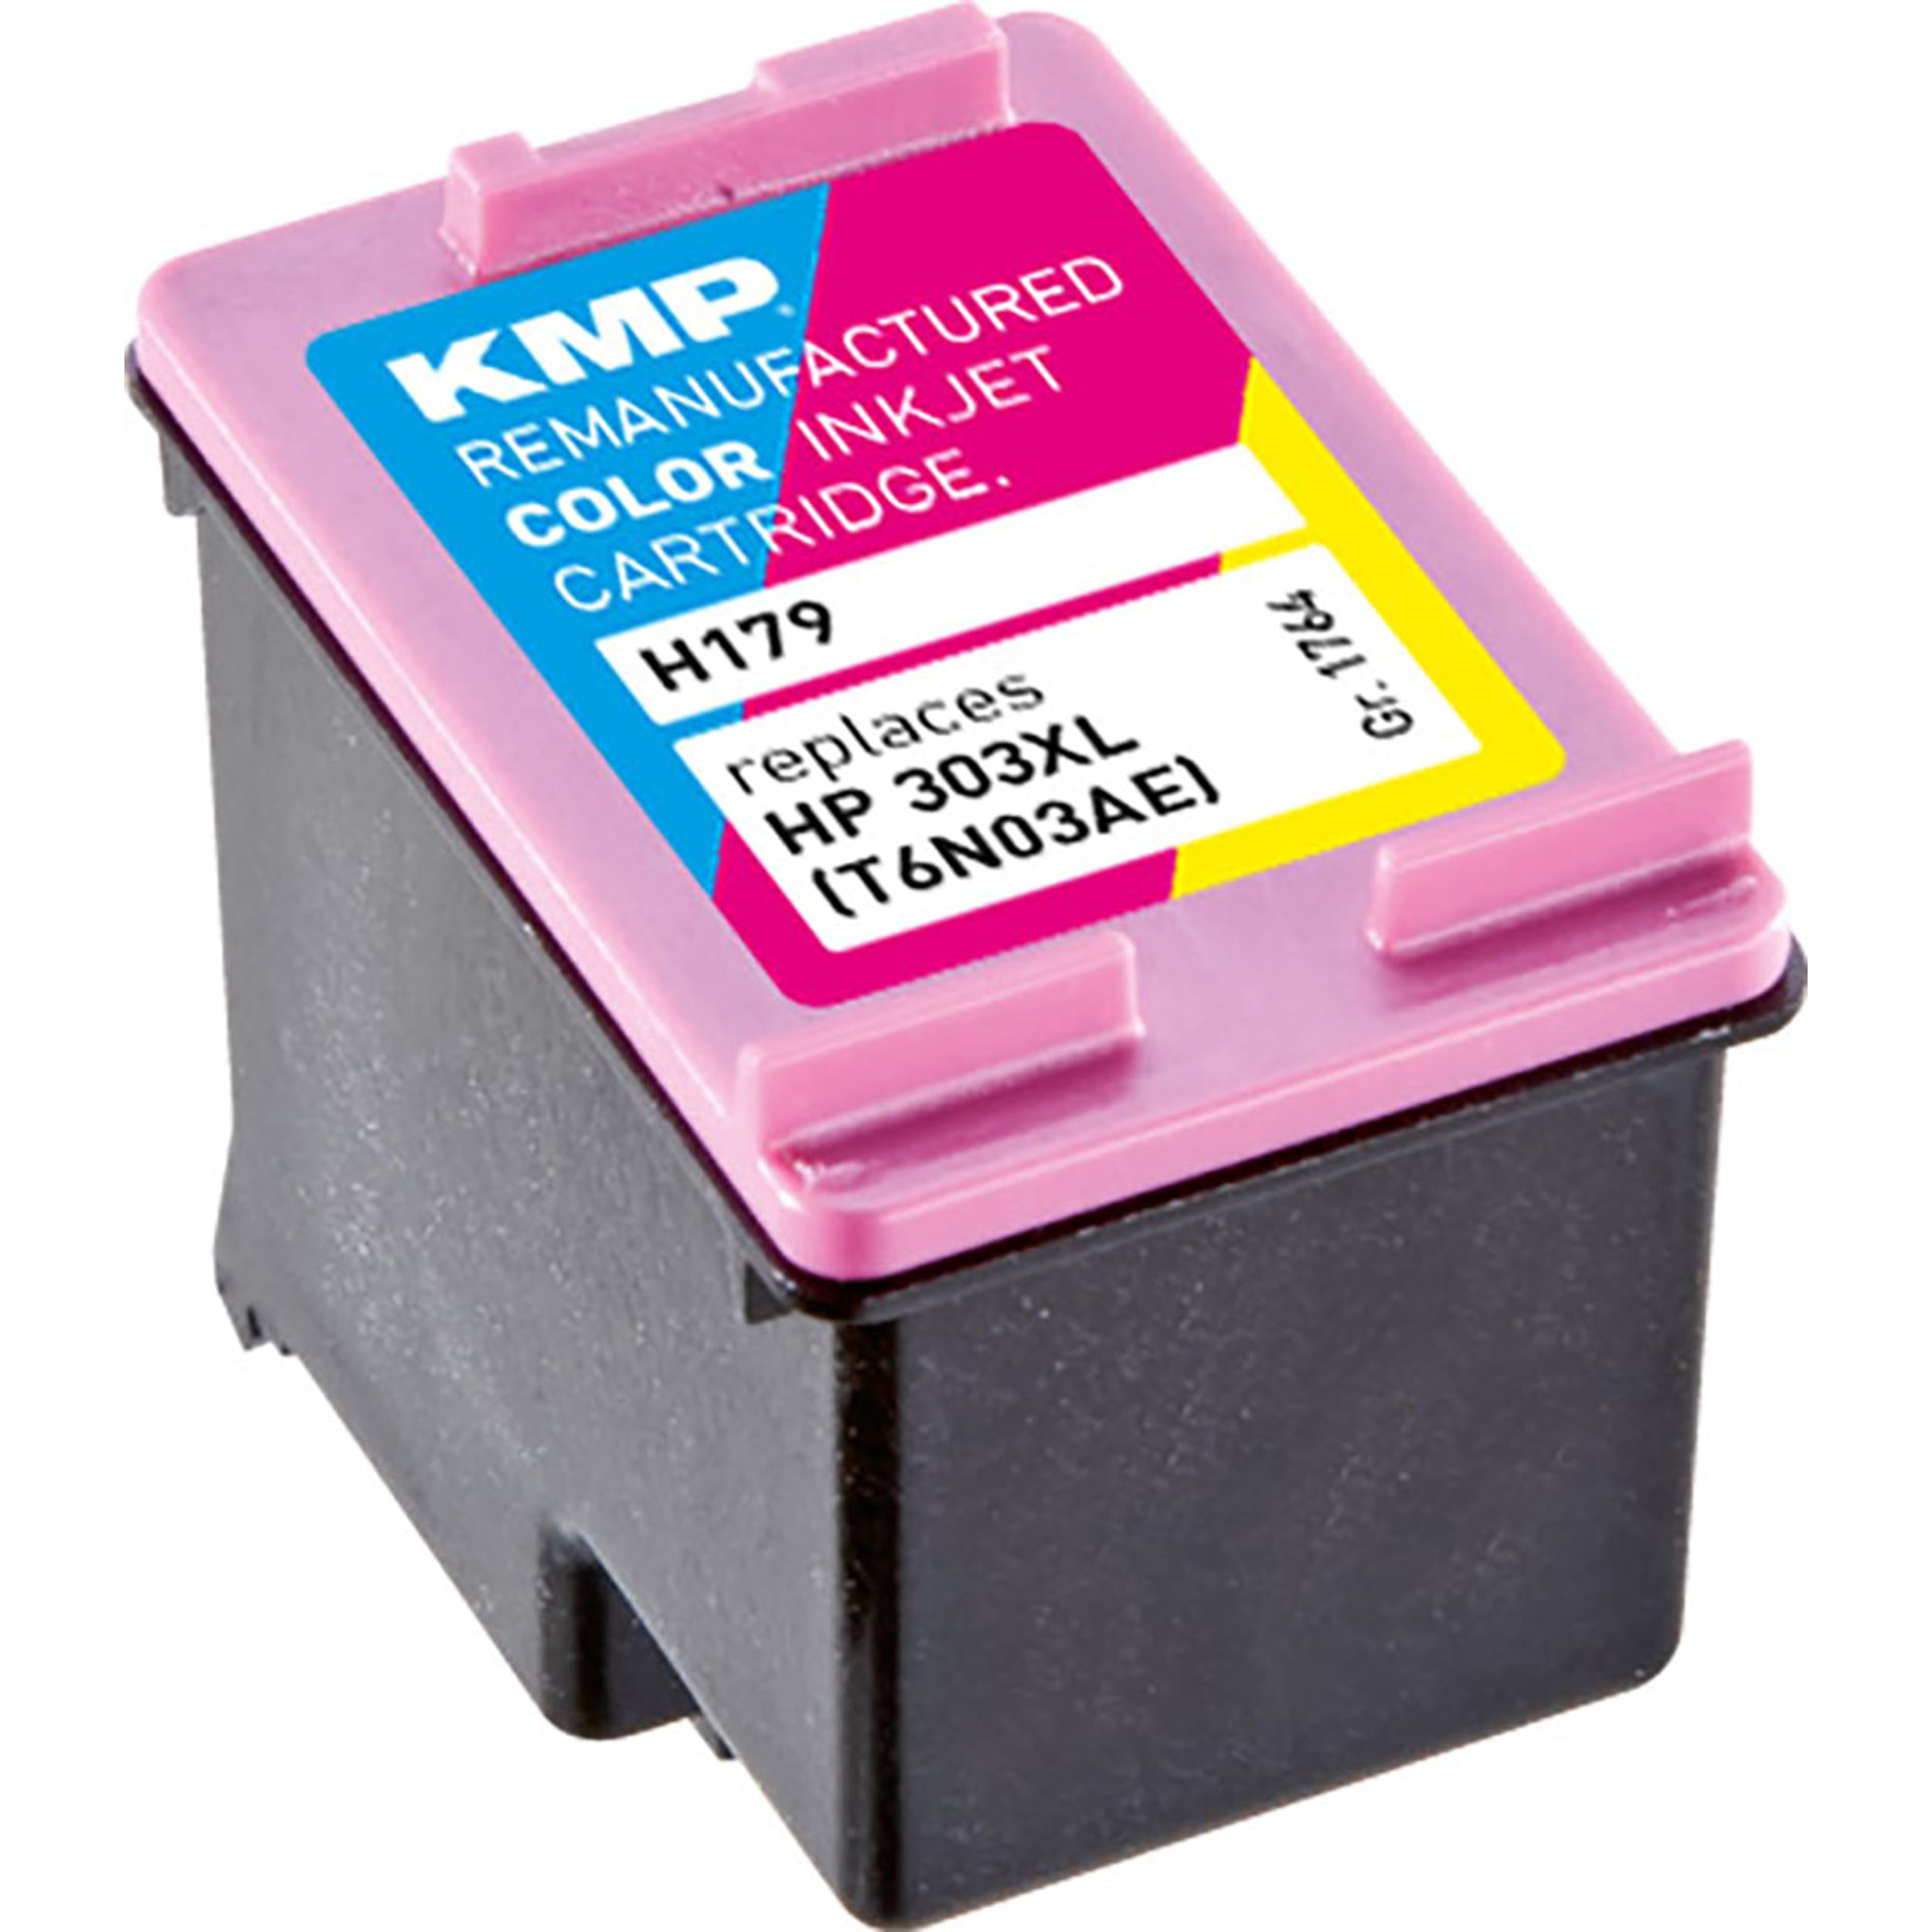 KMP (T6N03AE) für HP C,M,Y Ink (T6N03AE) 3-farbig 303XL 3-farbig Tintenpatrone Cartridge